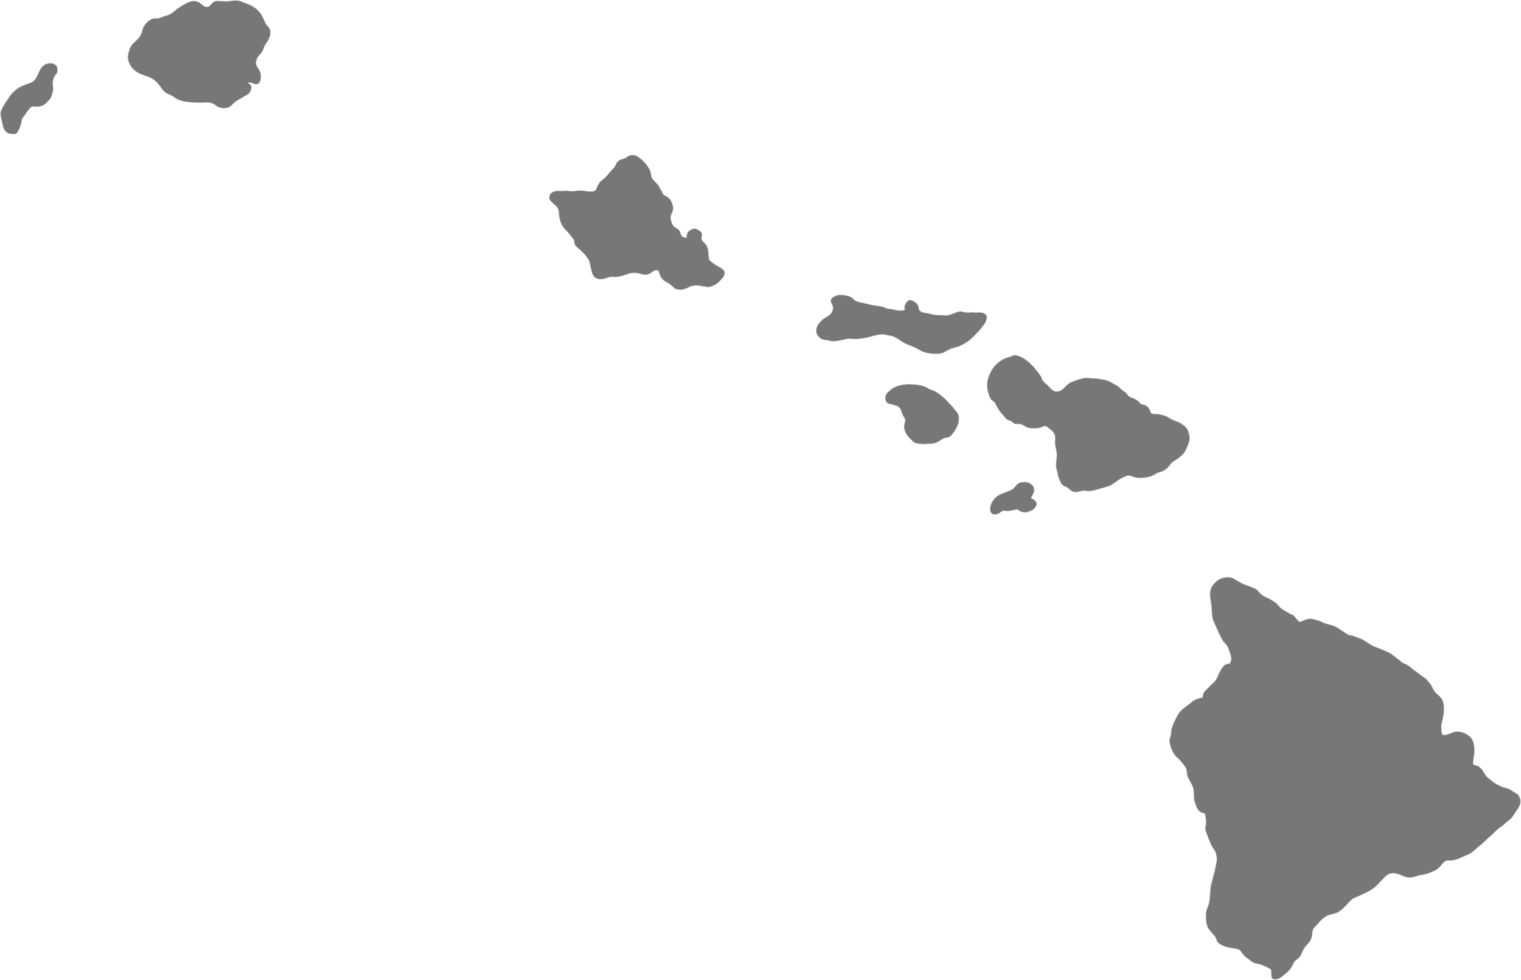 garabatear a mano dibujo de Hawai isla mapa. png